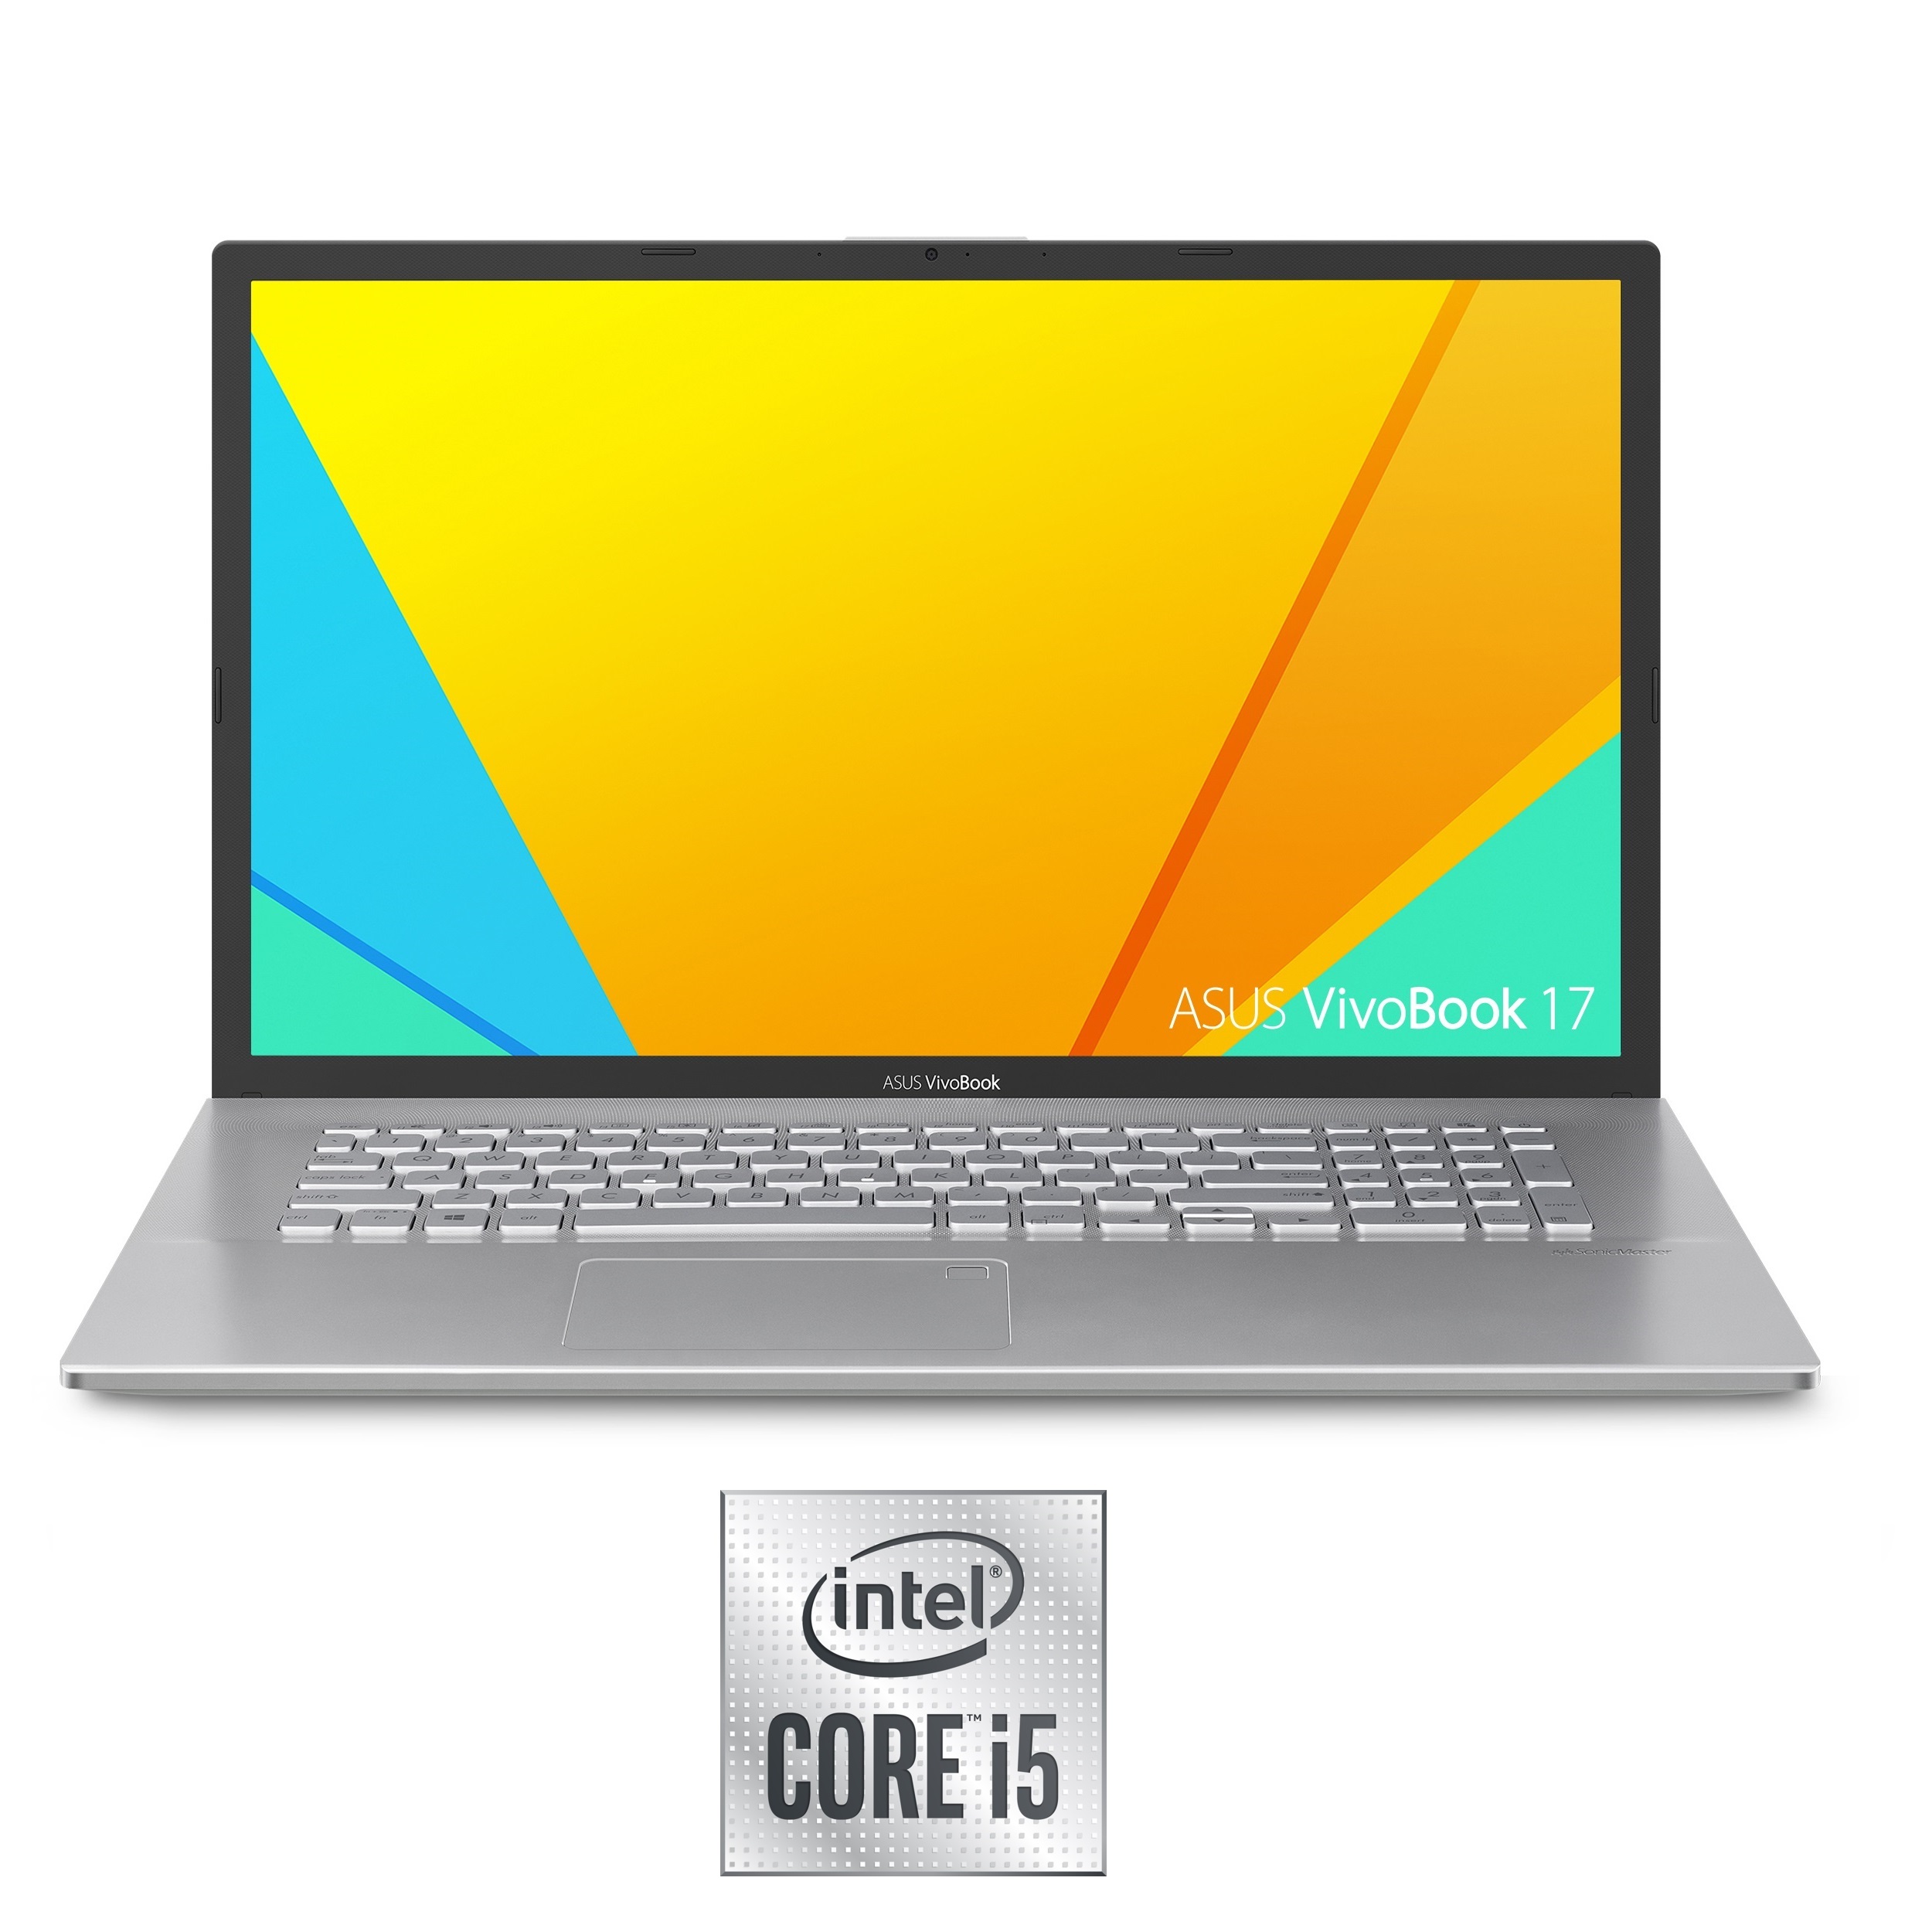 ASUS VivoBook 17.3" i5 8GB/1TB + 128GB Laptop; 17.3" FHD, Intel Core i5-1035G1, Intel UHD Graphics, 8GB RAM, 128GB SSD + 1TB HDD, Windows 10 Home, Silver, S712JA-WH54 - image 1 of 10